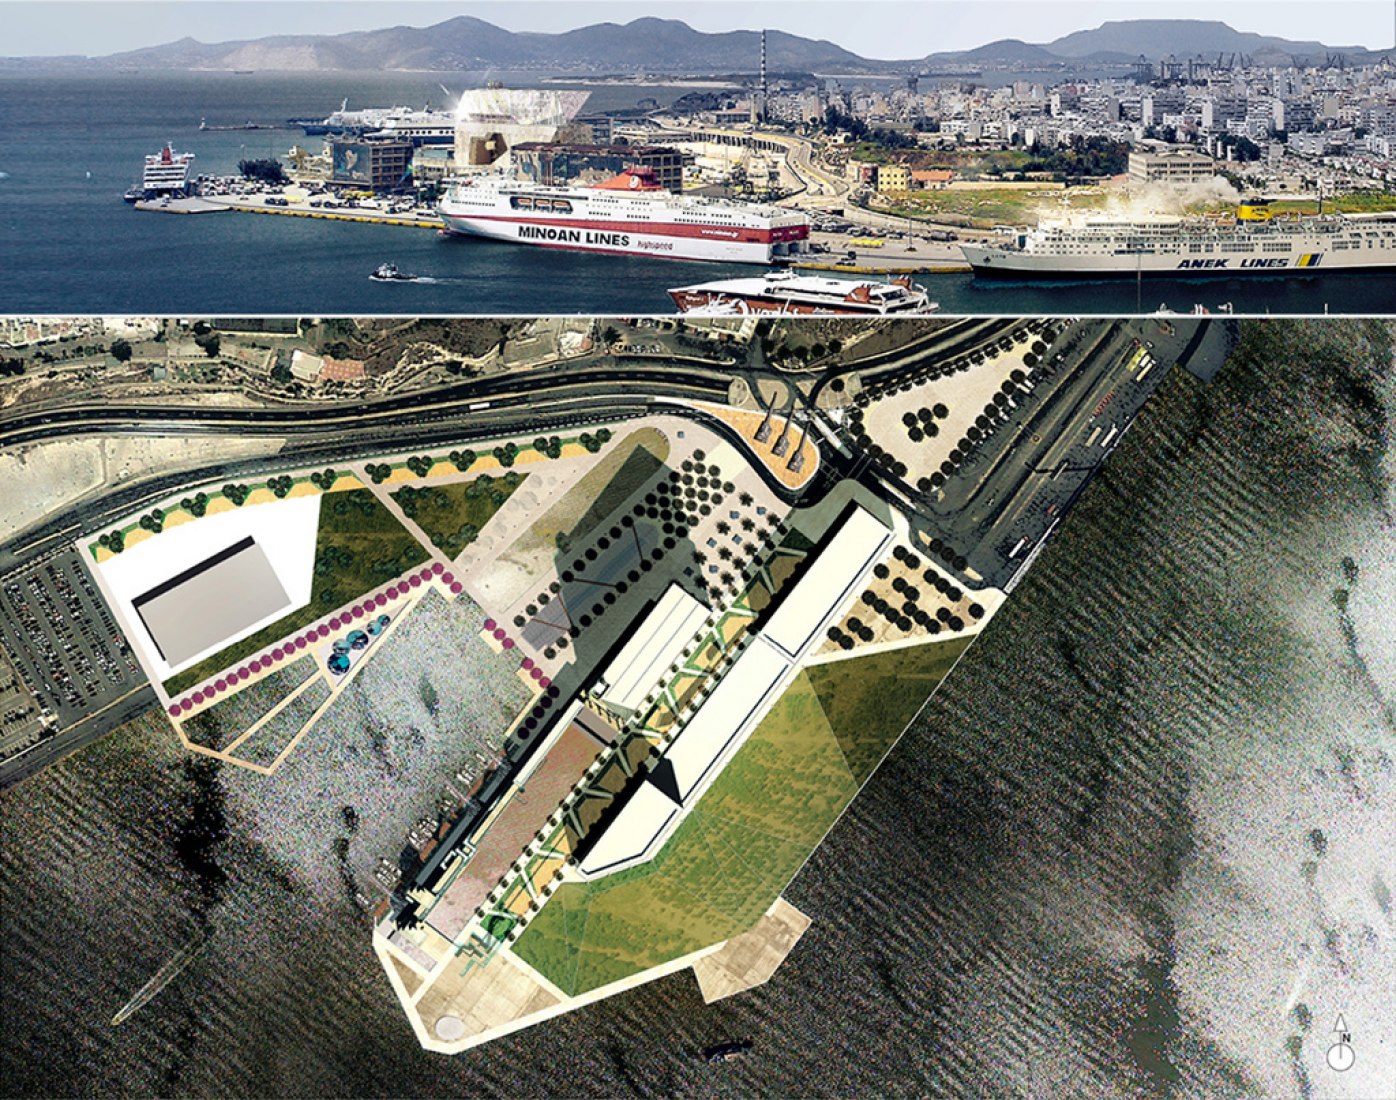 Piraeus Cultural Coast Competition by Sériès et Sériès, Studio Touraine Tajima, Open Design, Office ARUP.